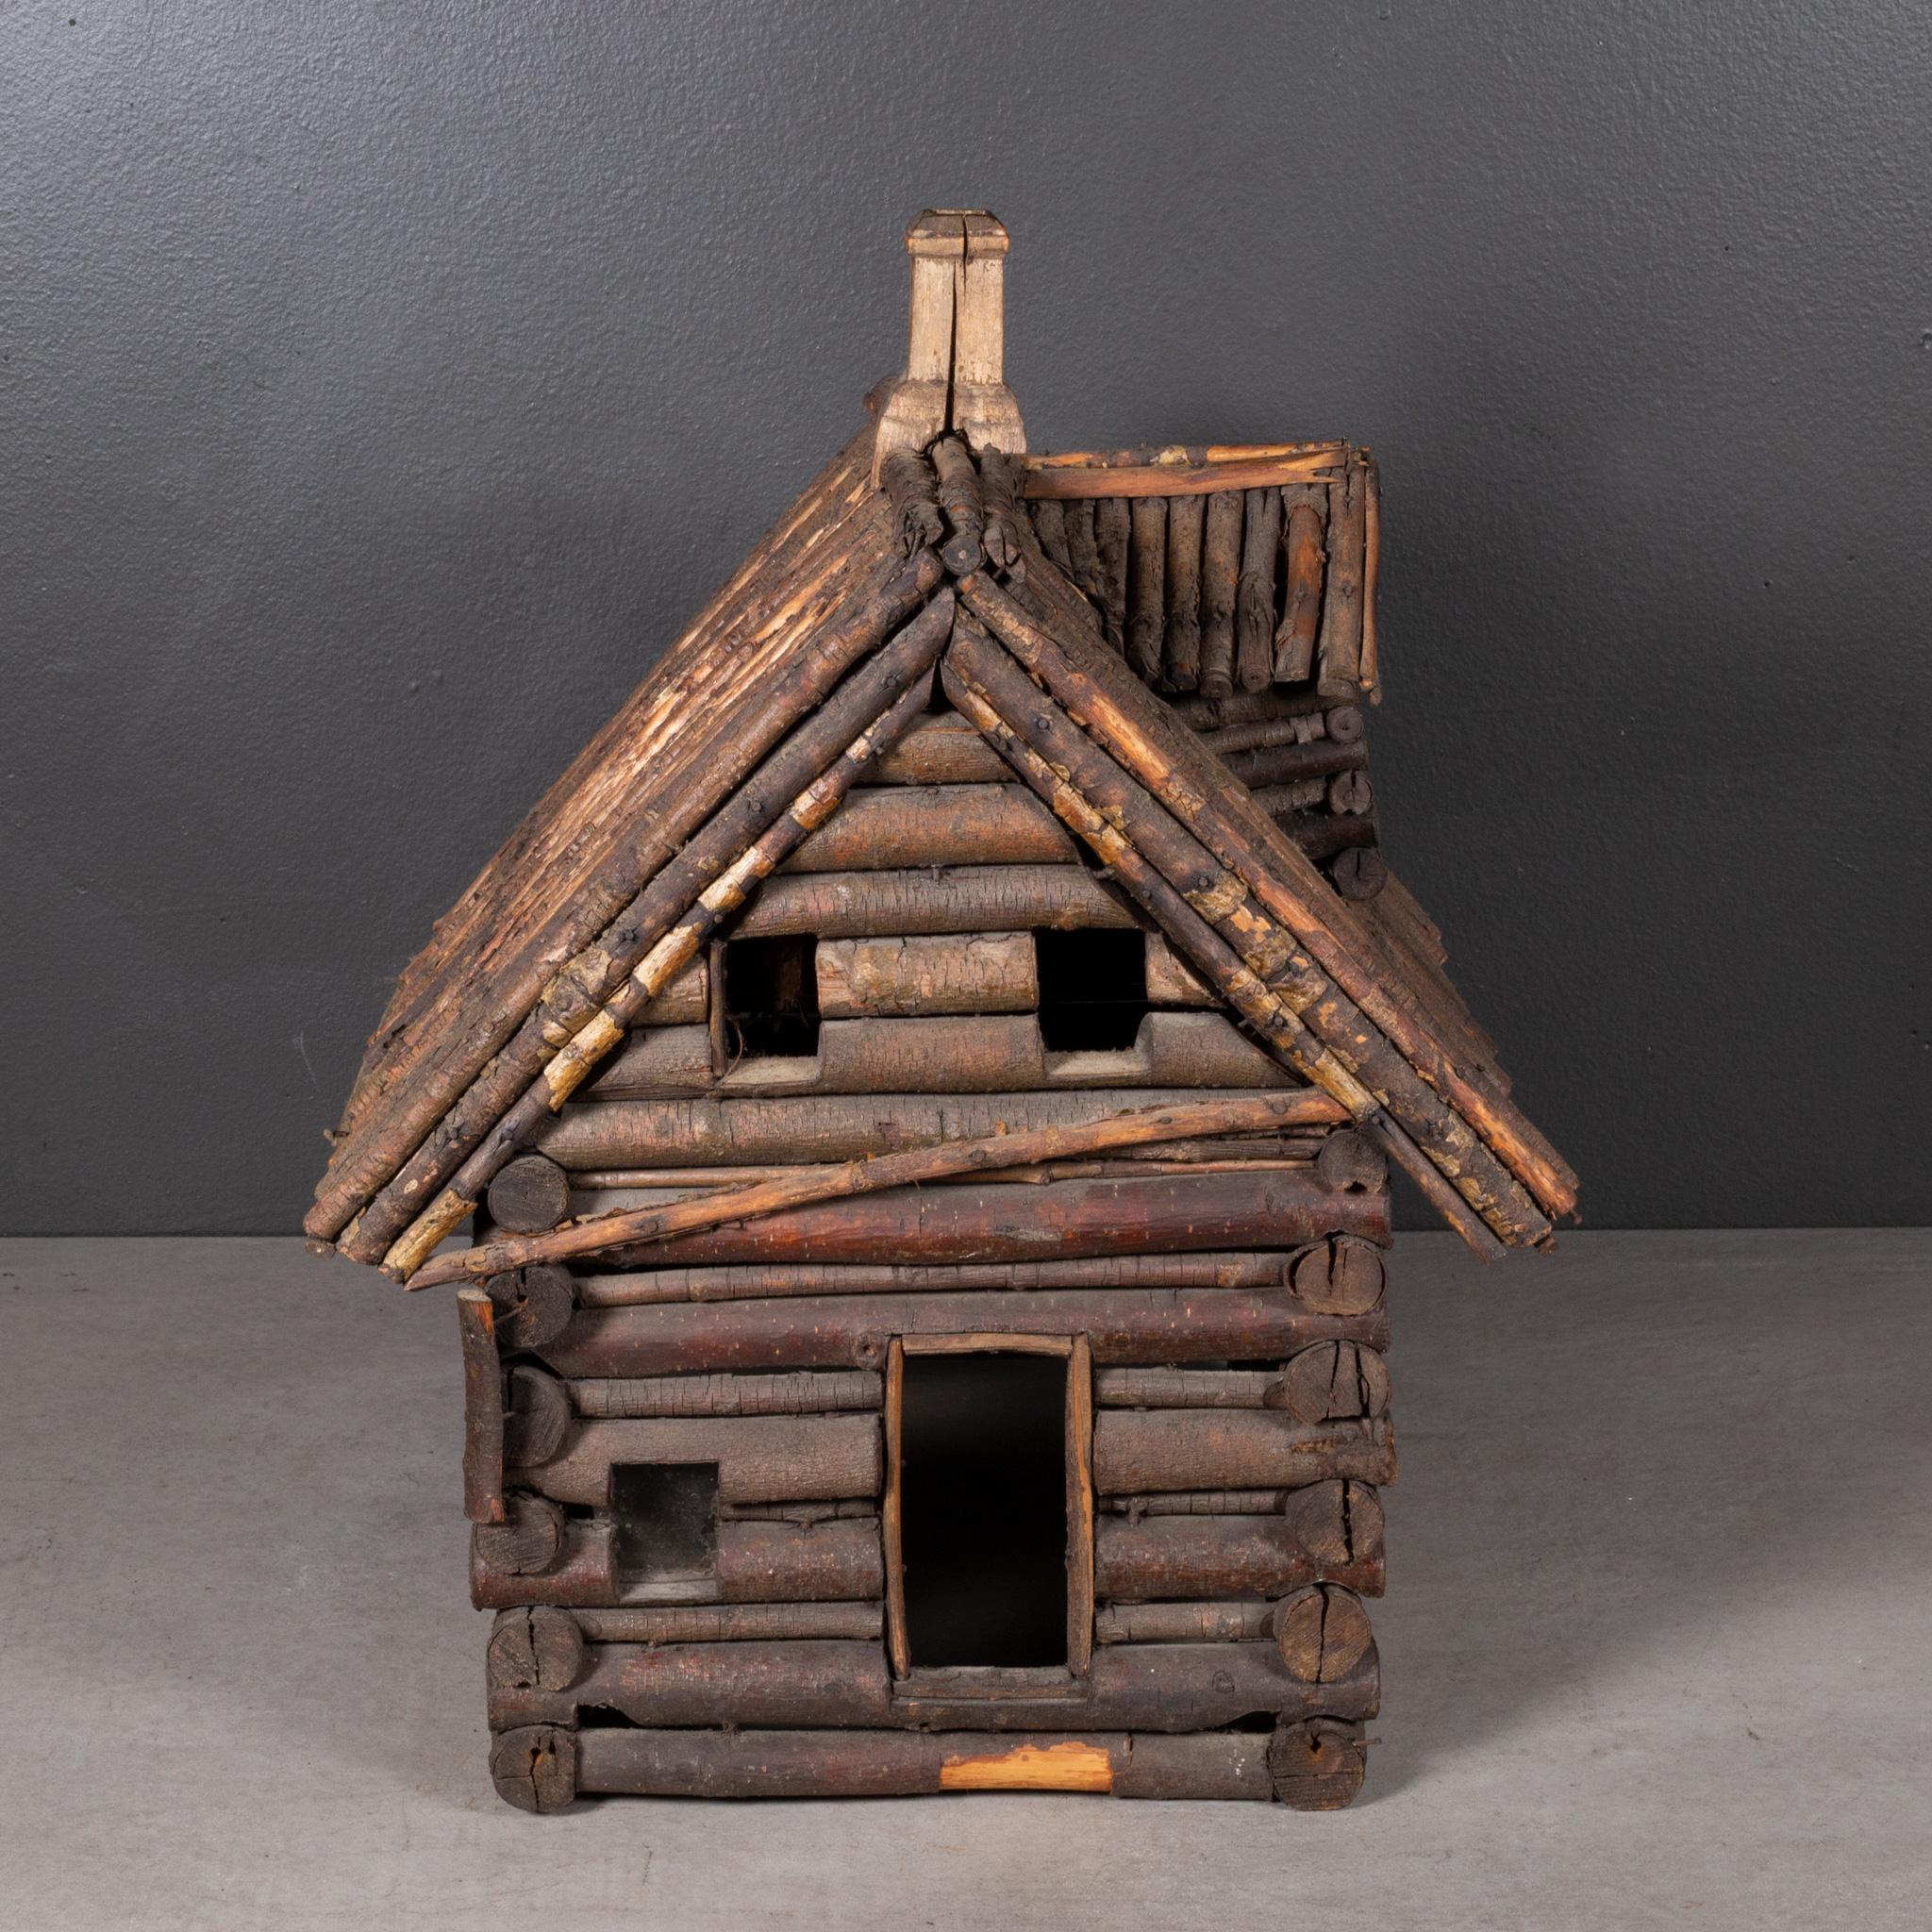 Wood Early 20th c. Folk Art Log Cabin Model c.1900-1940 (FREE SHIPPING) For Sale